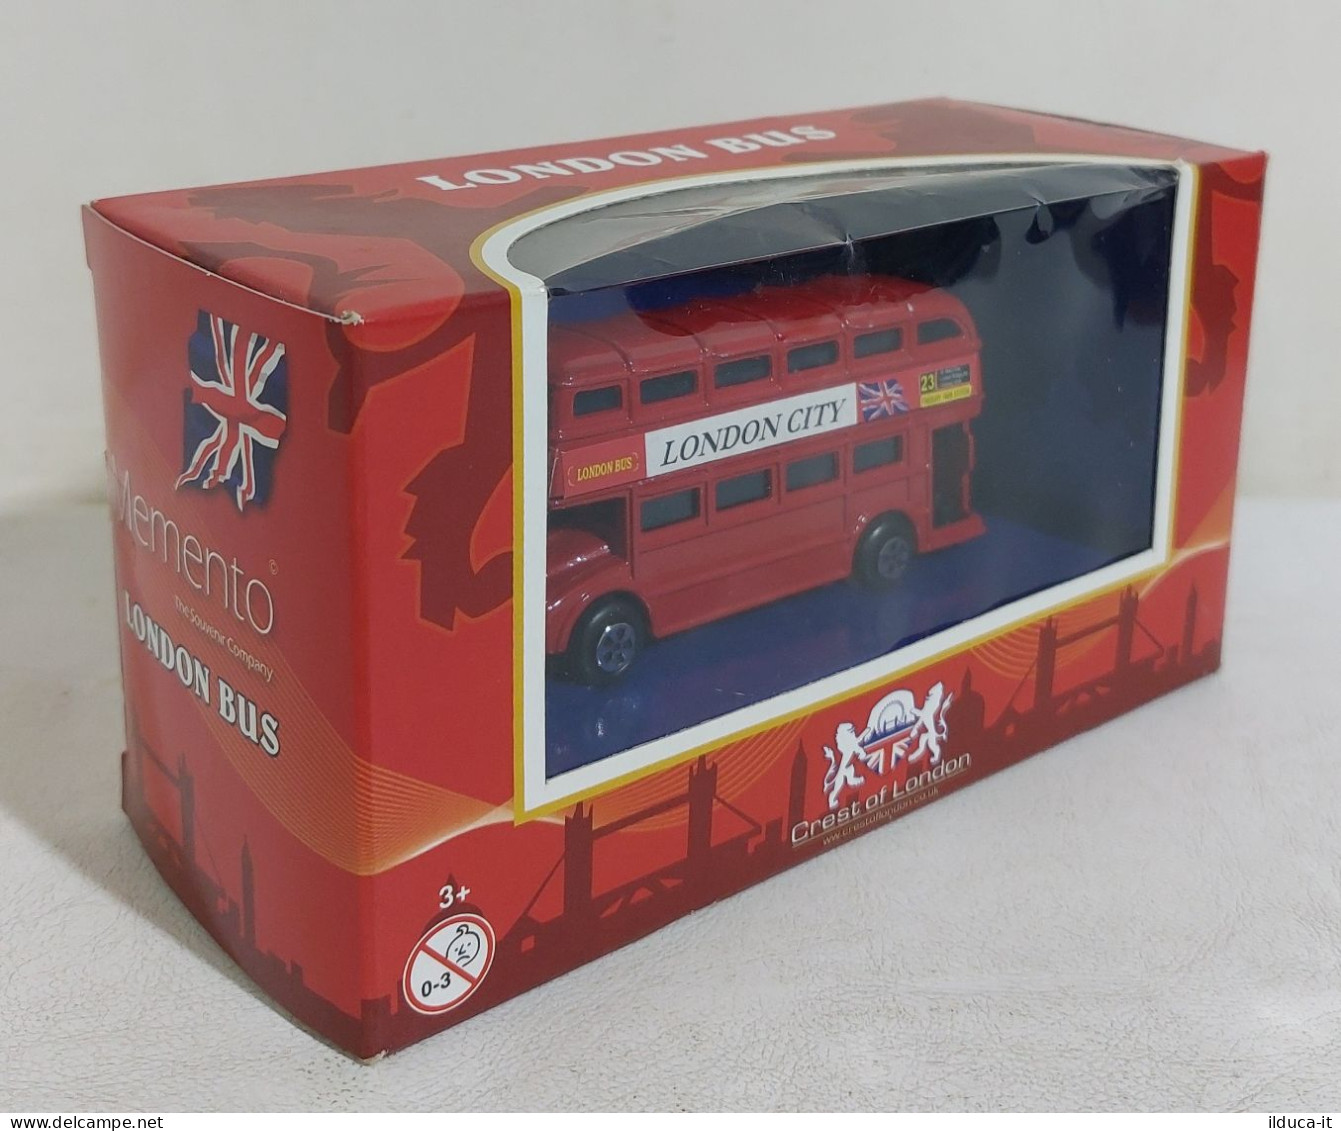 I114328 Memento 1/72 - London Bus - Box - Crest Of London - Scale 1:72